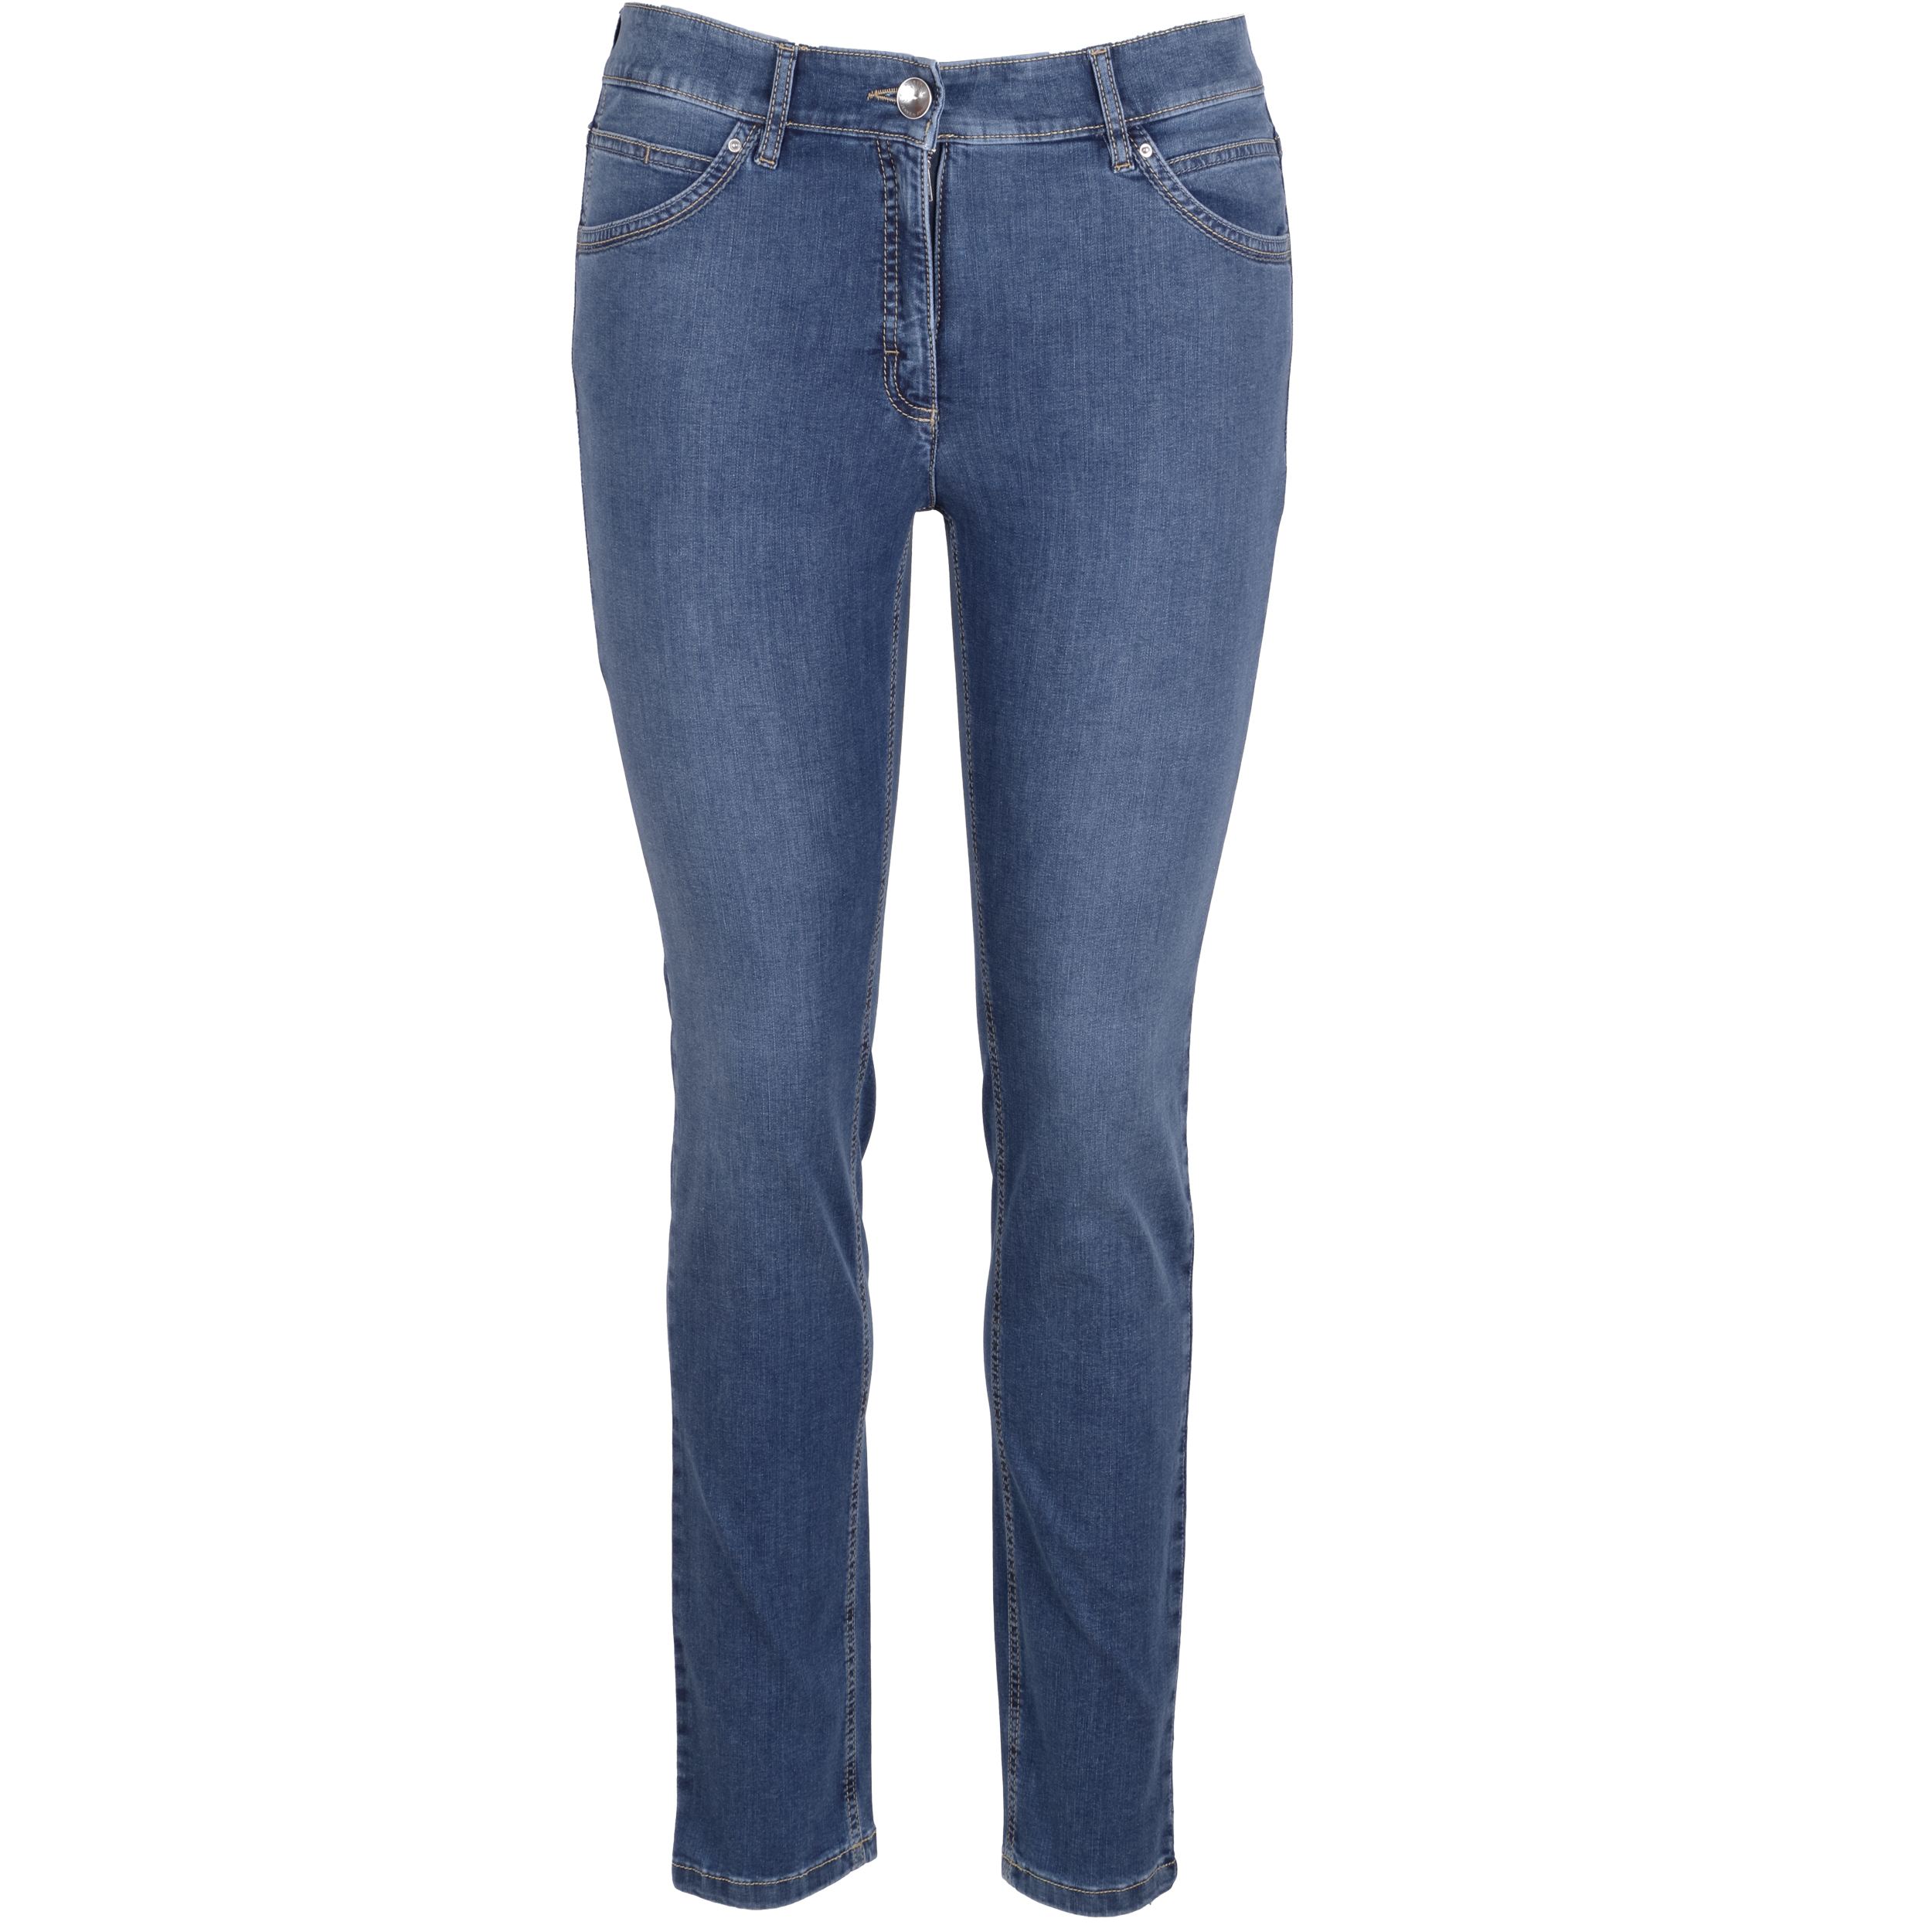 Zerres Damen Jeans Twigy Sensational  42 blau